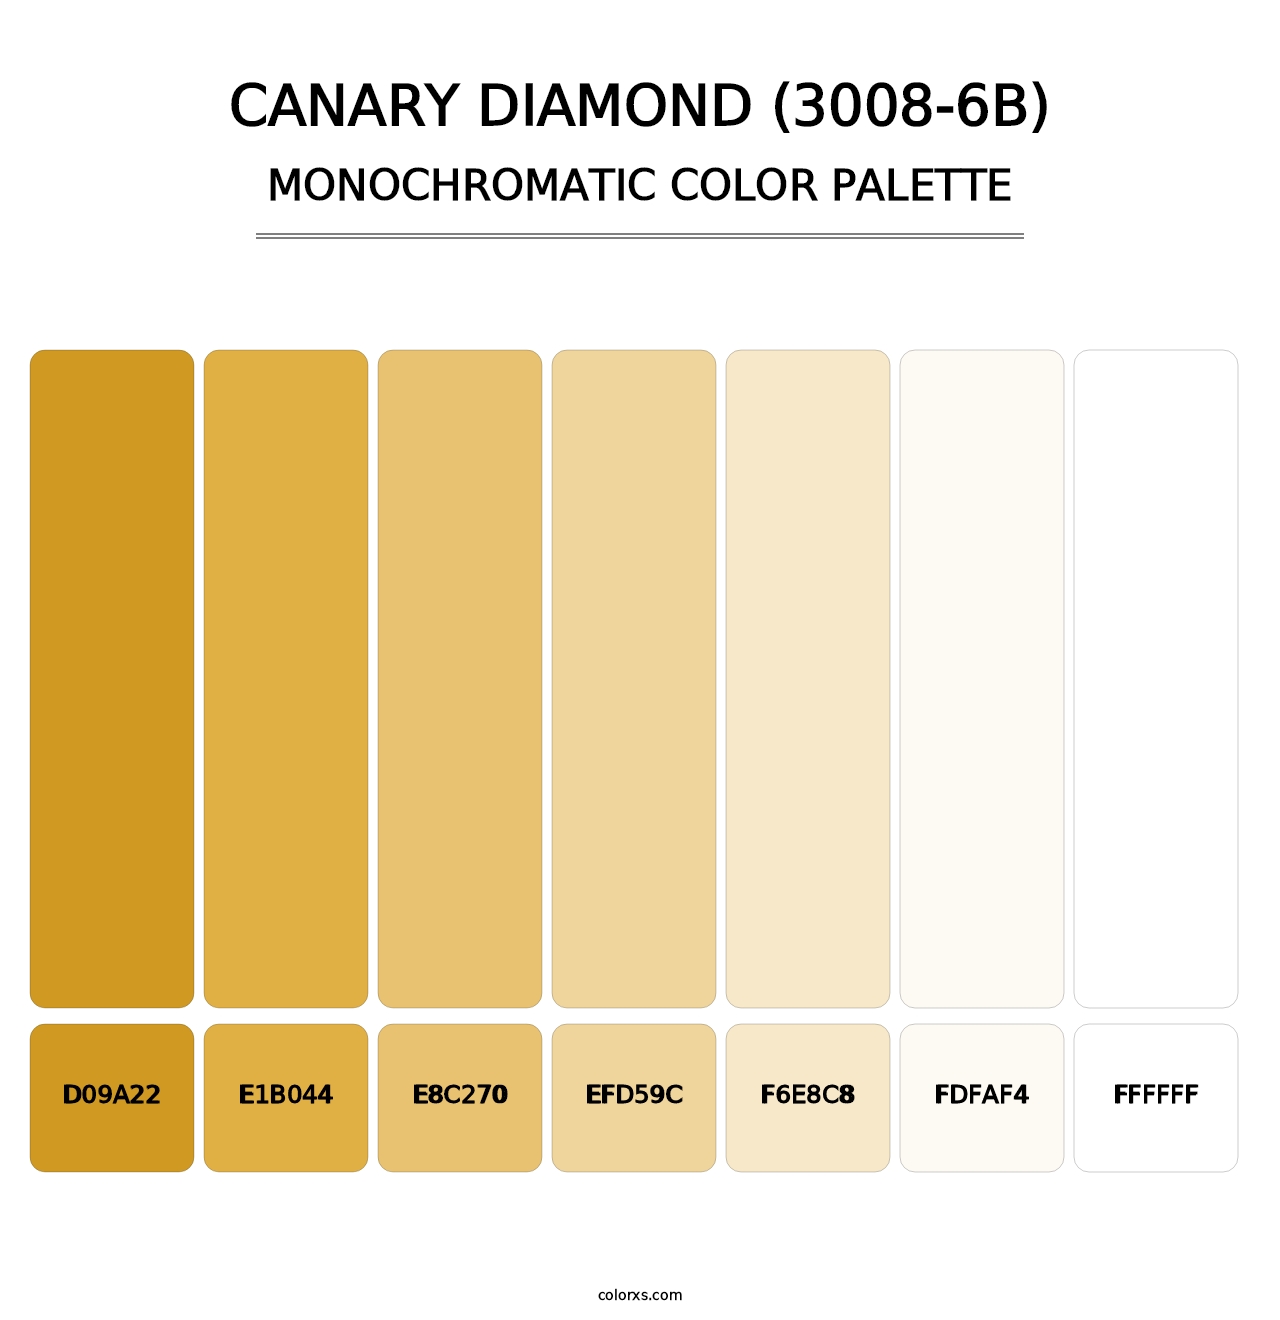 Canary Diamond (3008-6B) - Monochromatic Color Palette